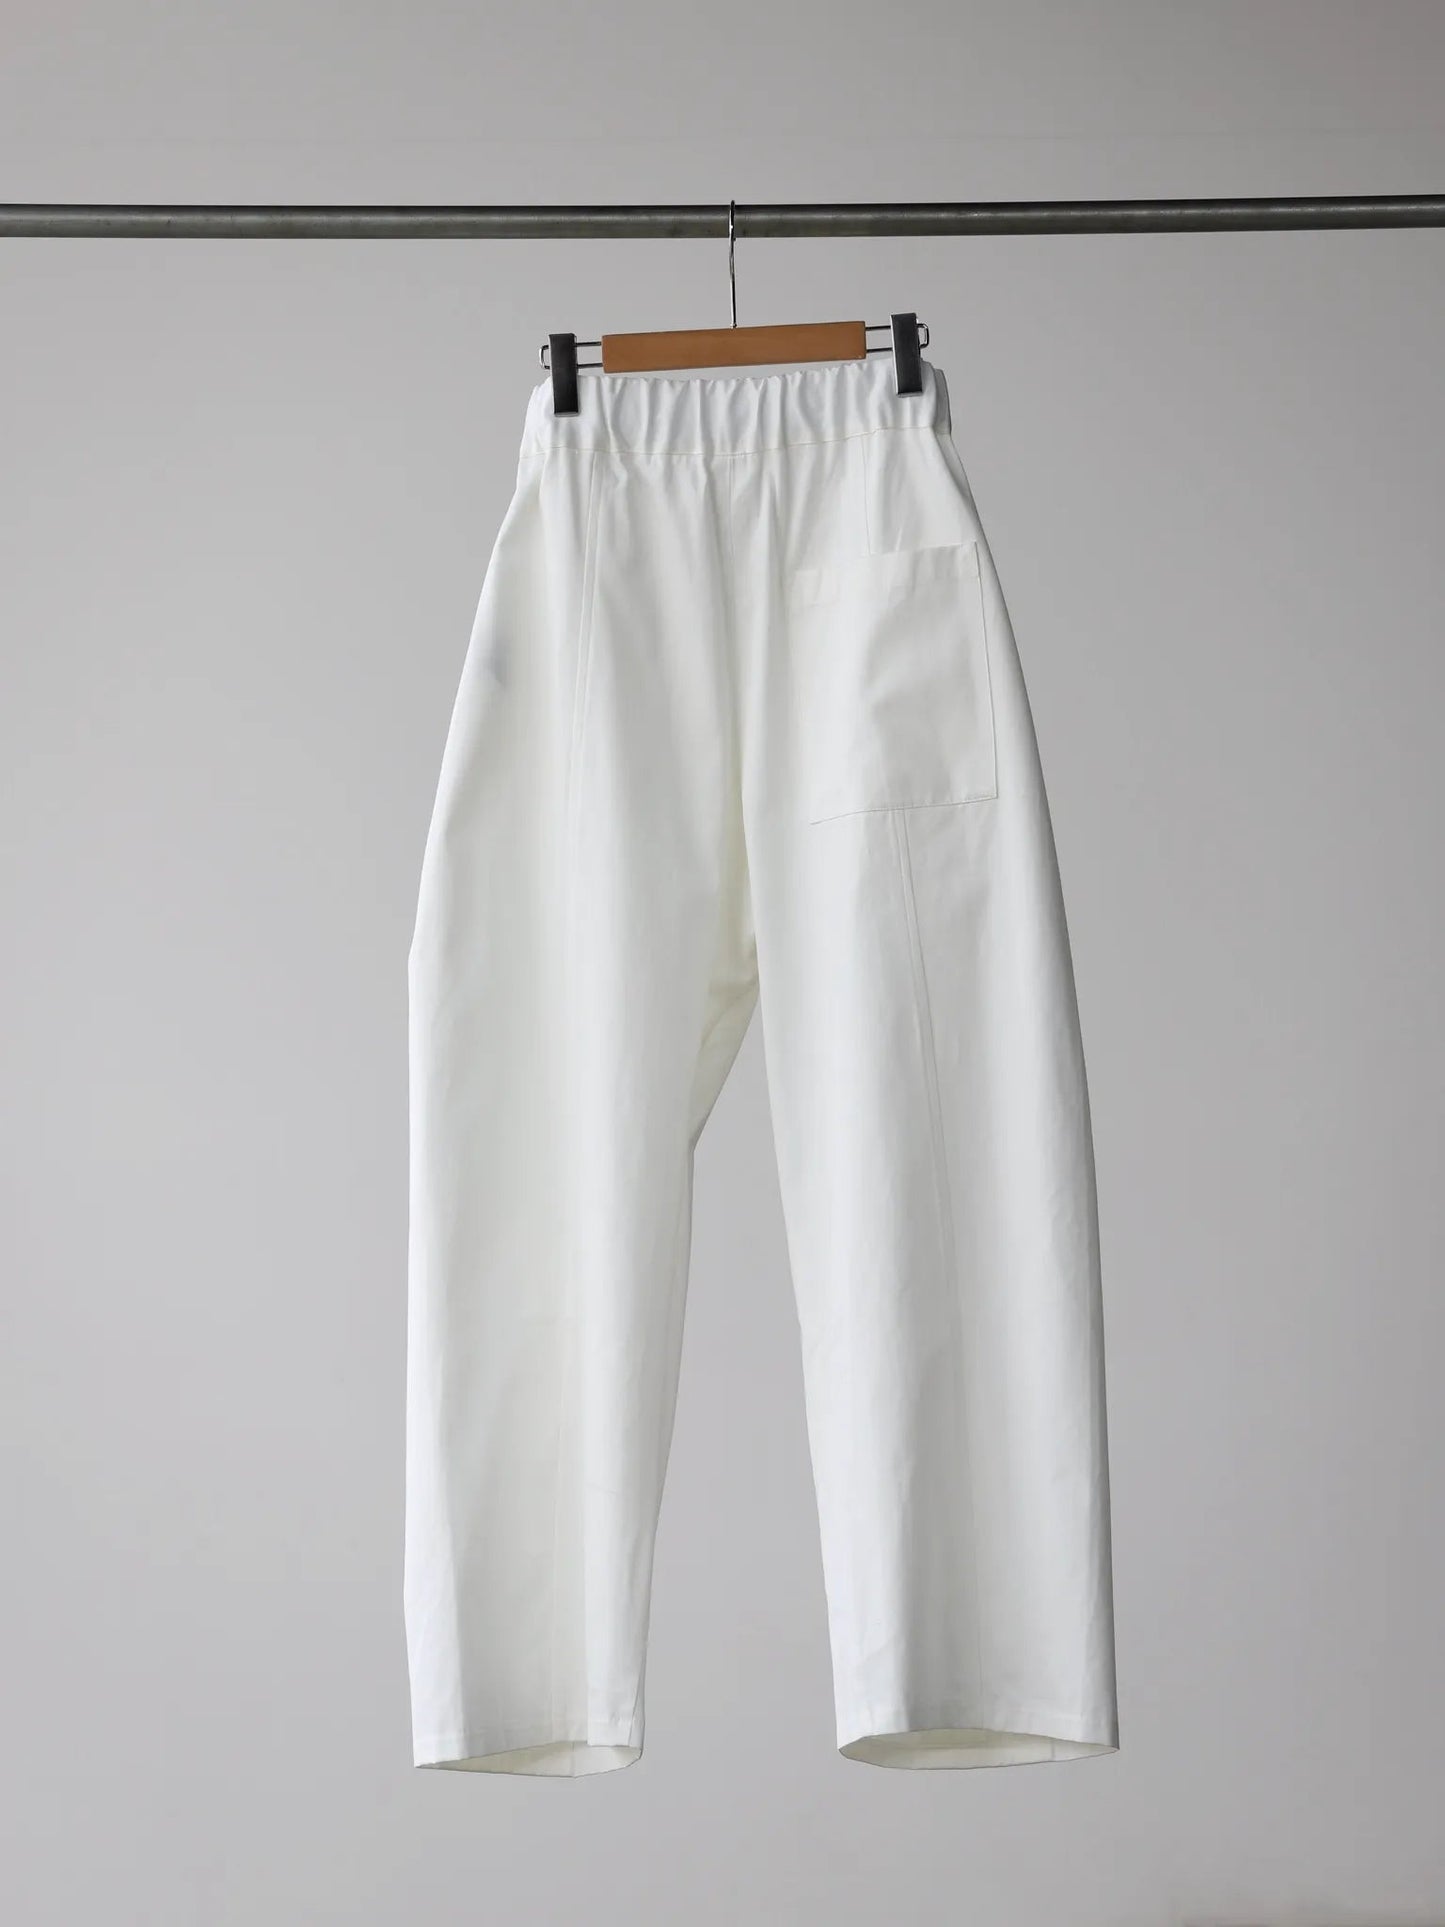 sage-nation-box-pleat-trouser-optic-white-1-2